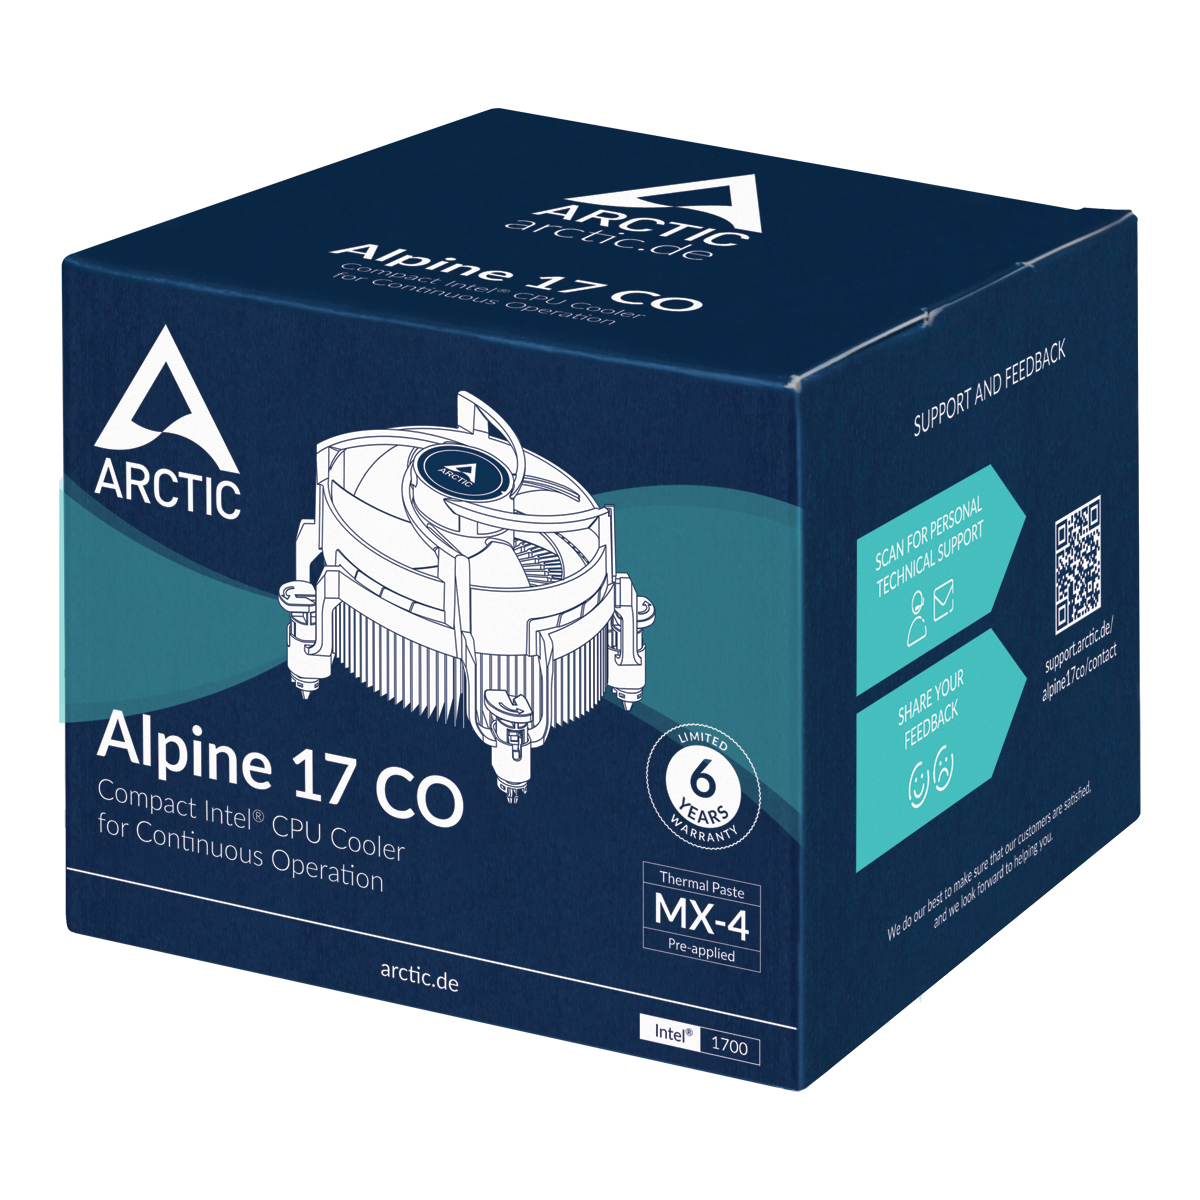 Alpine_17_CO_G06